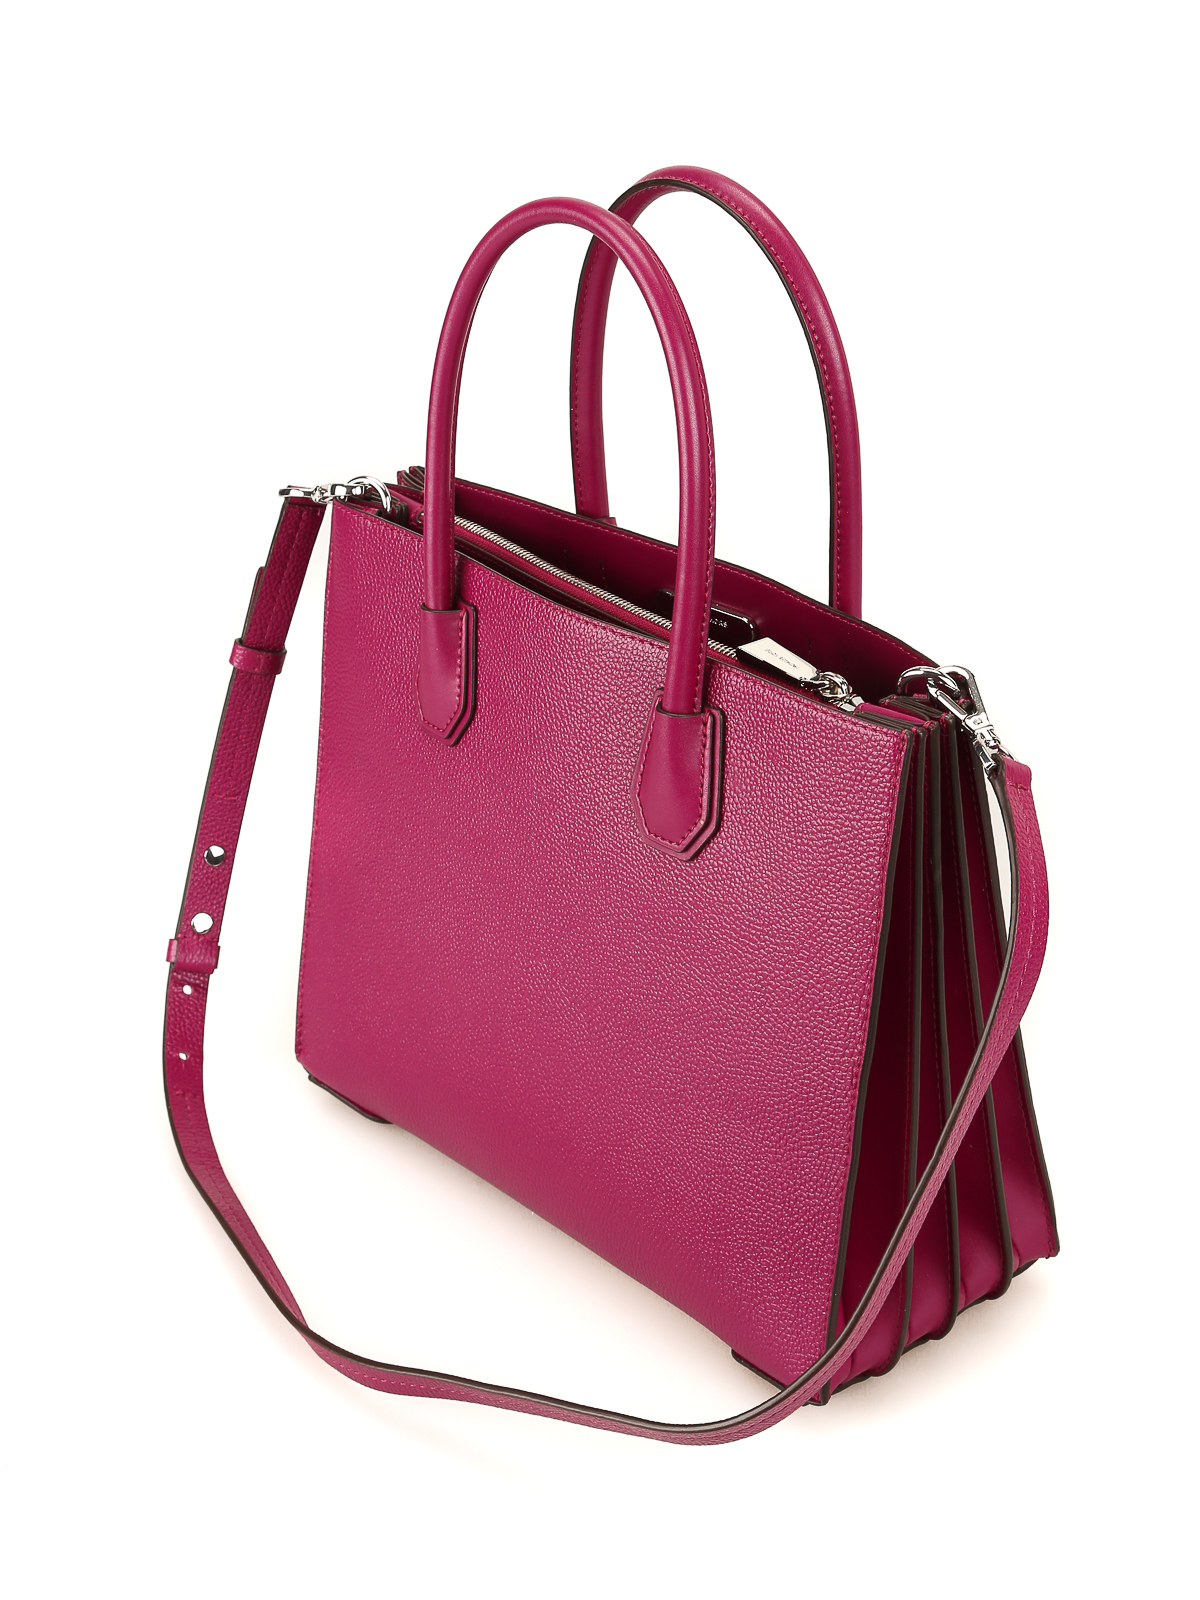 Michael Kors Handbag Mercer Accordion Large Pebbled Leather Soft Pink Tote  Bag